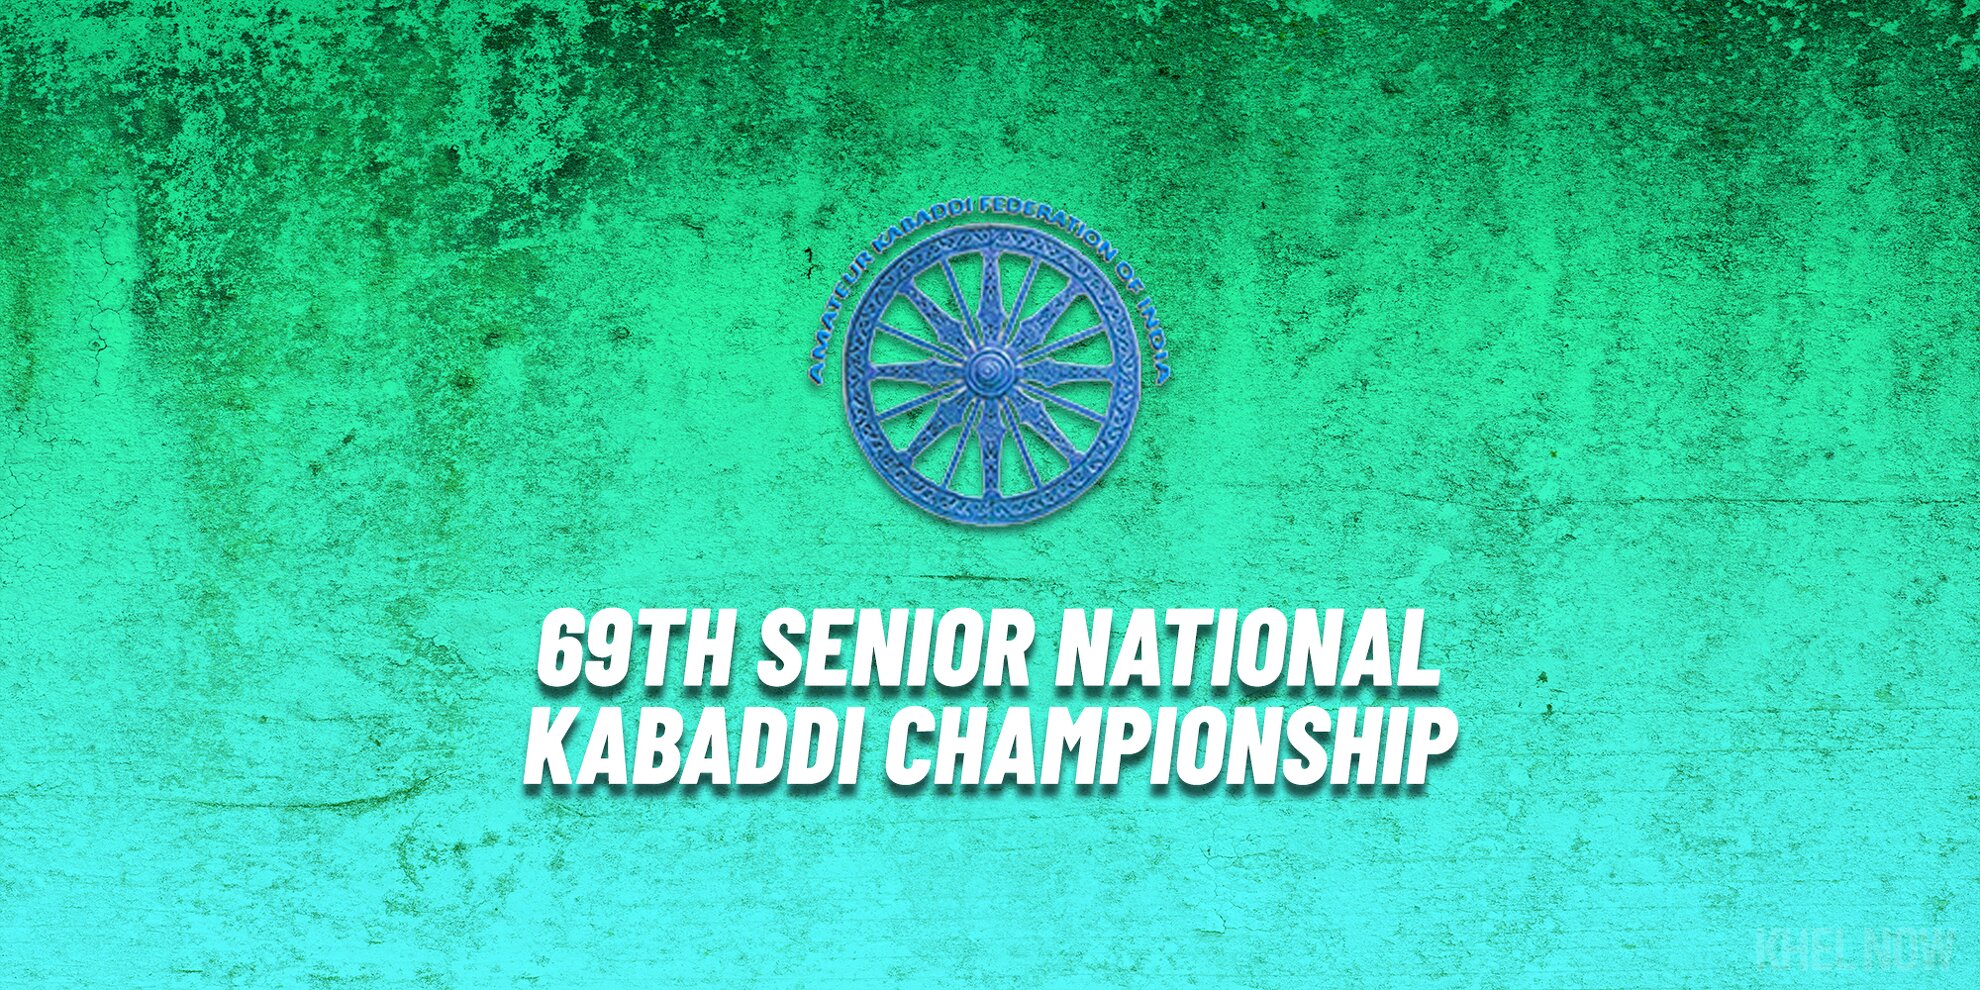 69th Senior National Kabaddi Championship